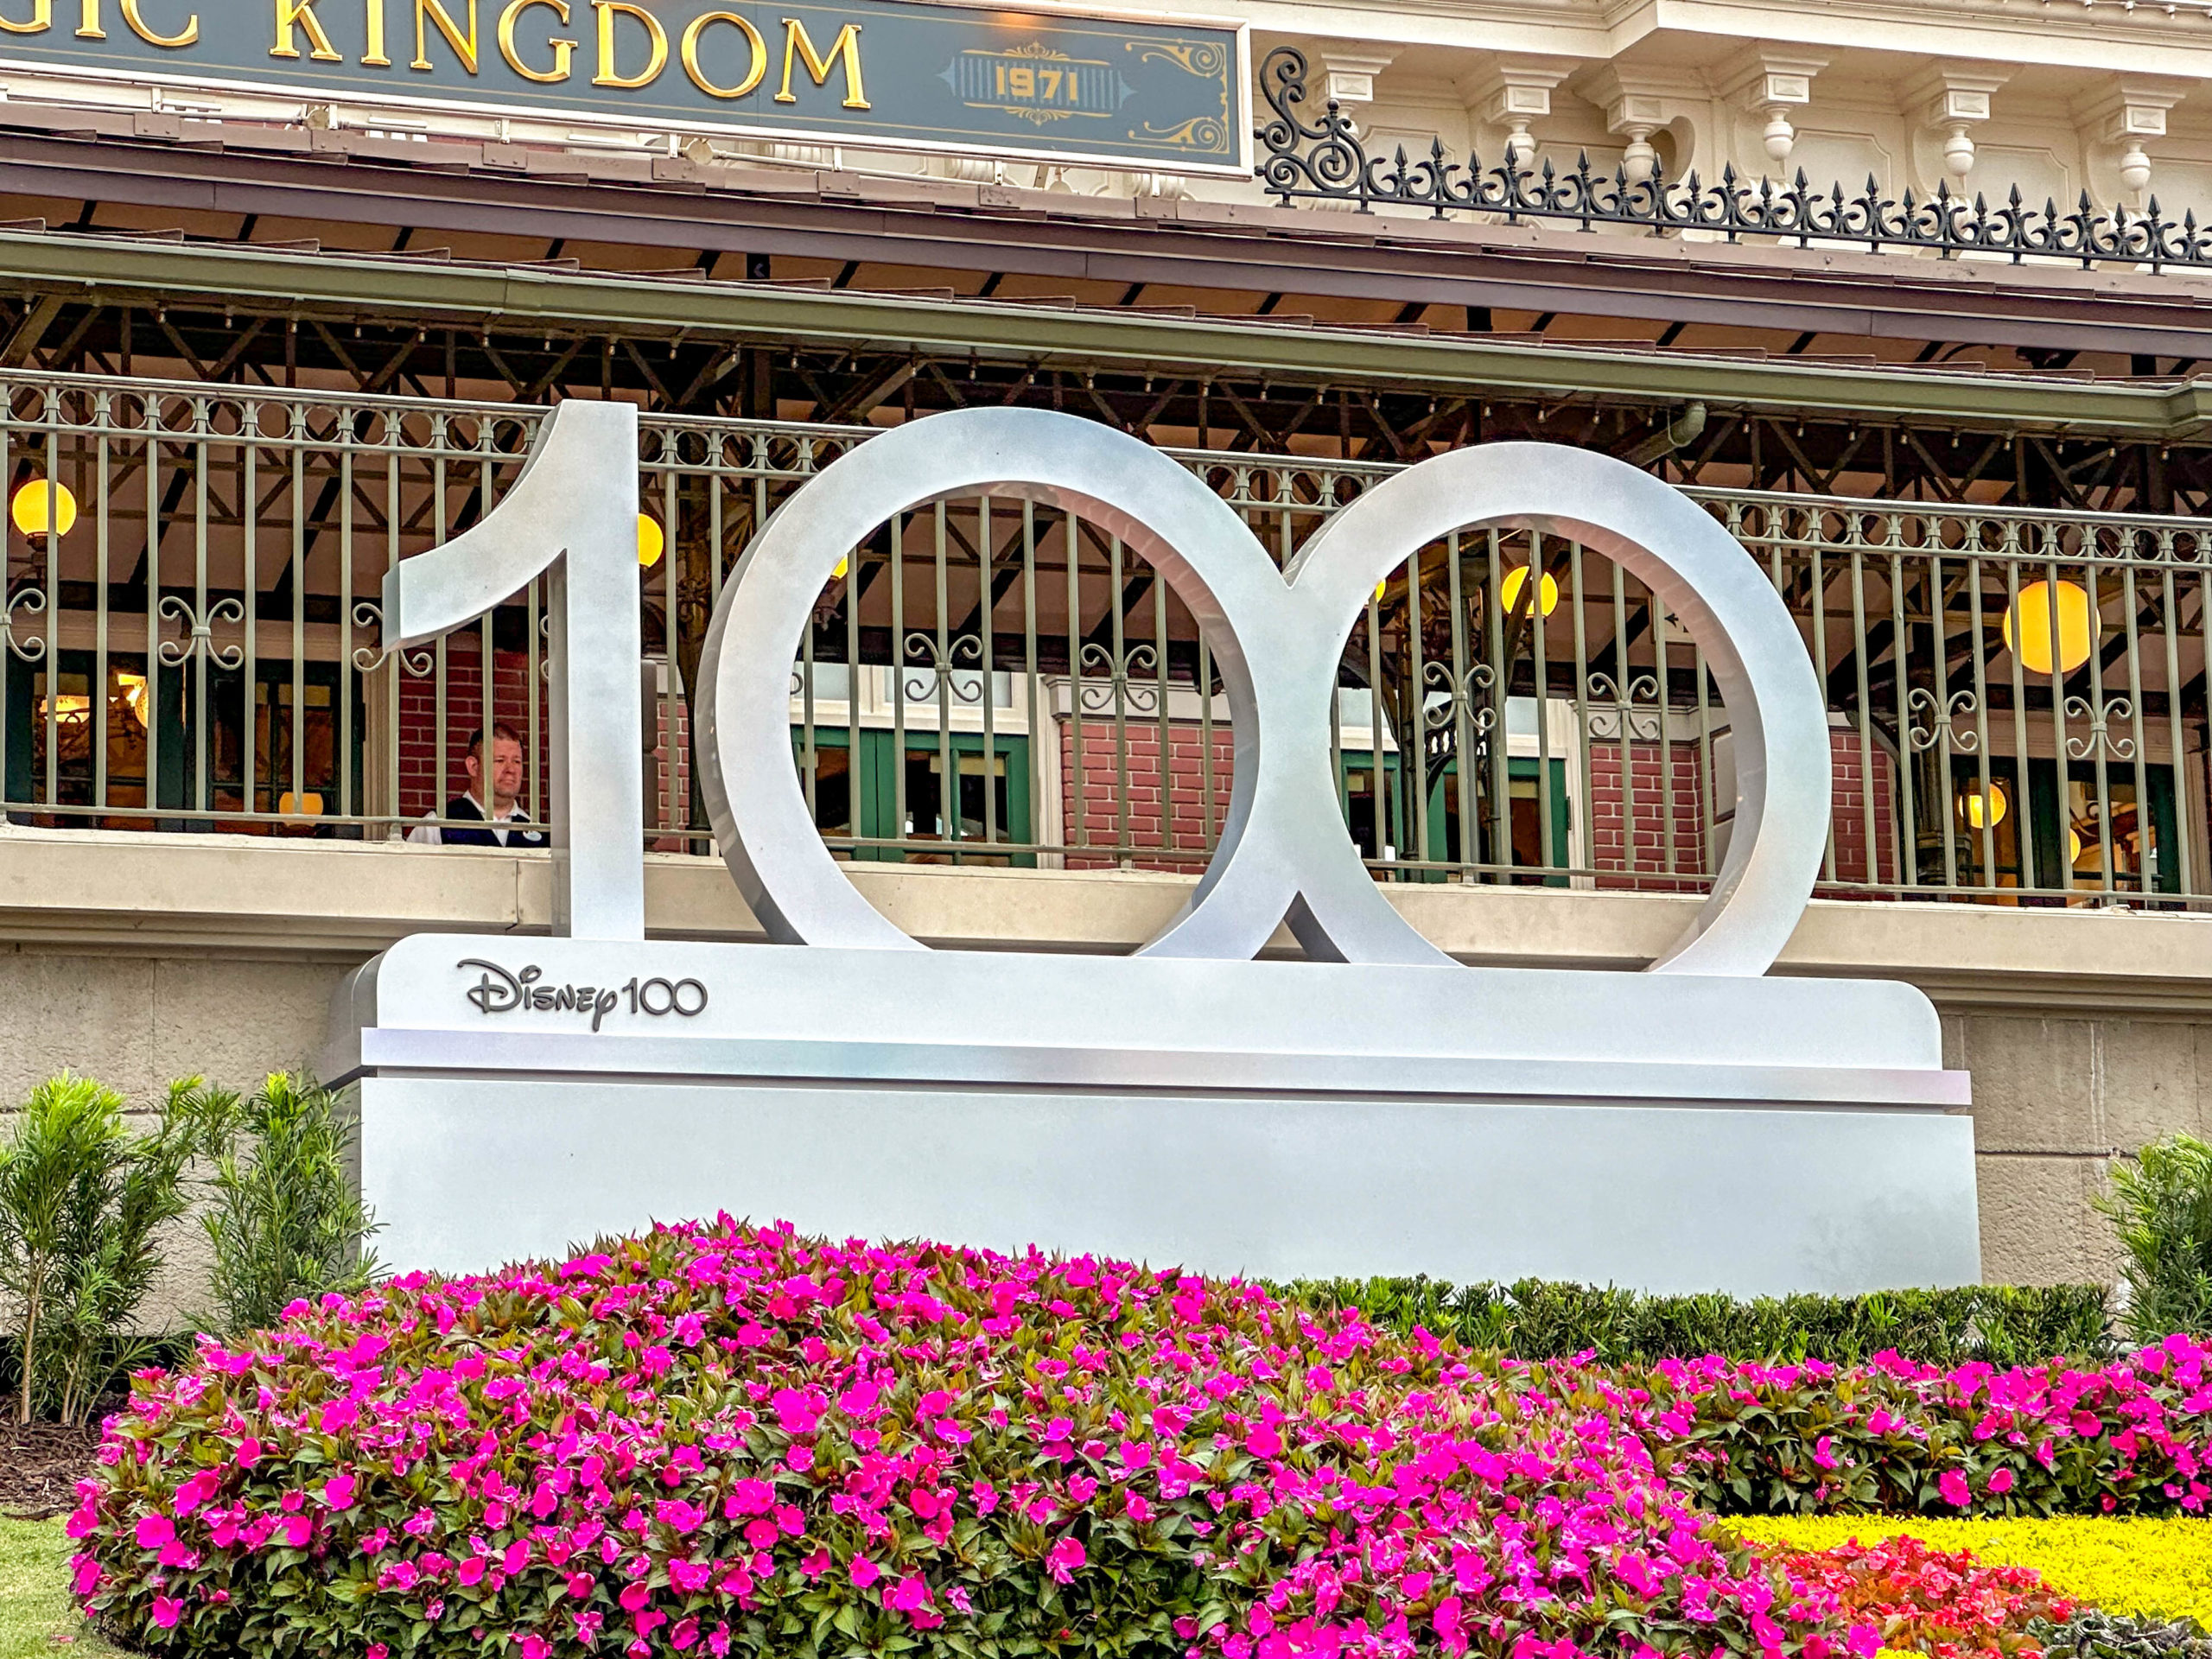 Magic Kingdom 100